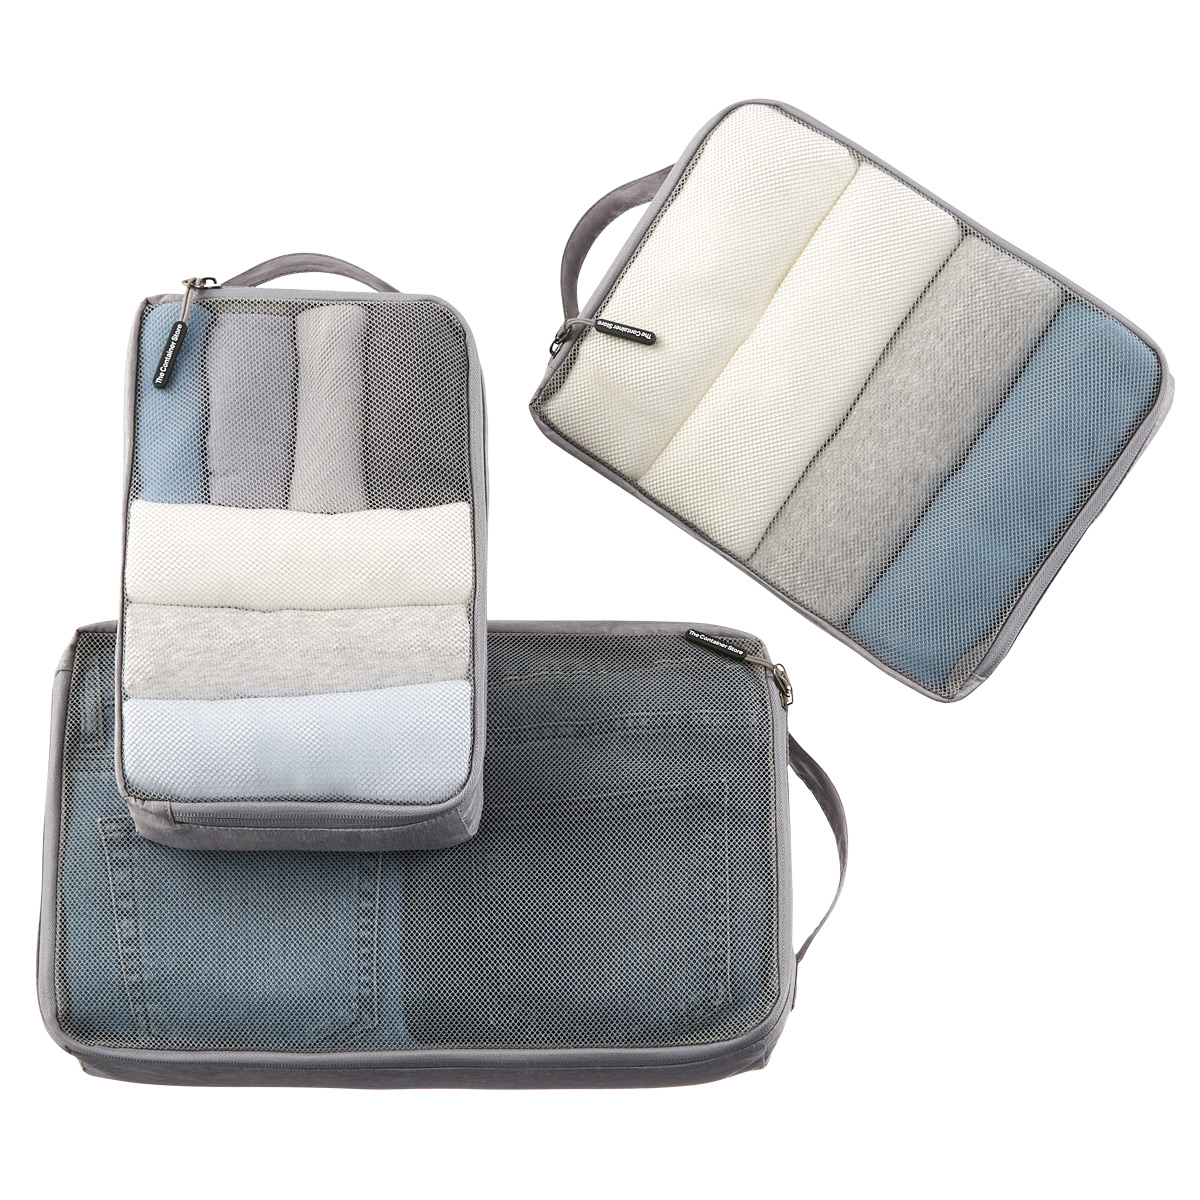 Travel Luggage Organizer Wardrobe Holder Foldable Ziploc Bags Portable  Travel Shelves Bag Hanging Organizers Mesh Storage System - AliExpress